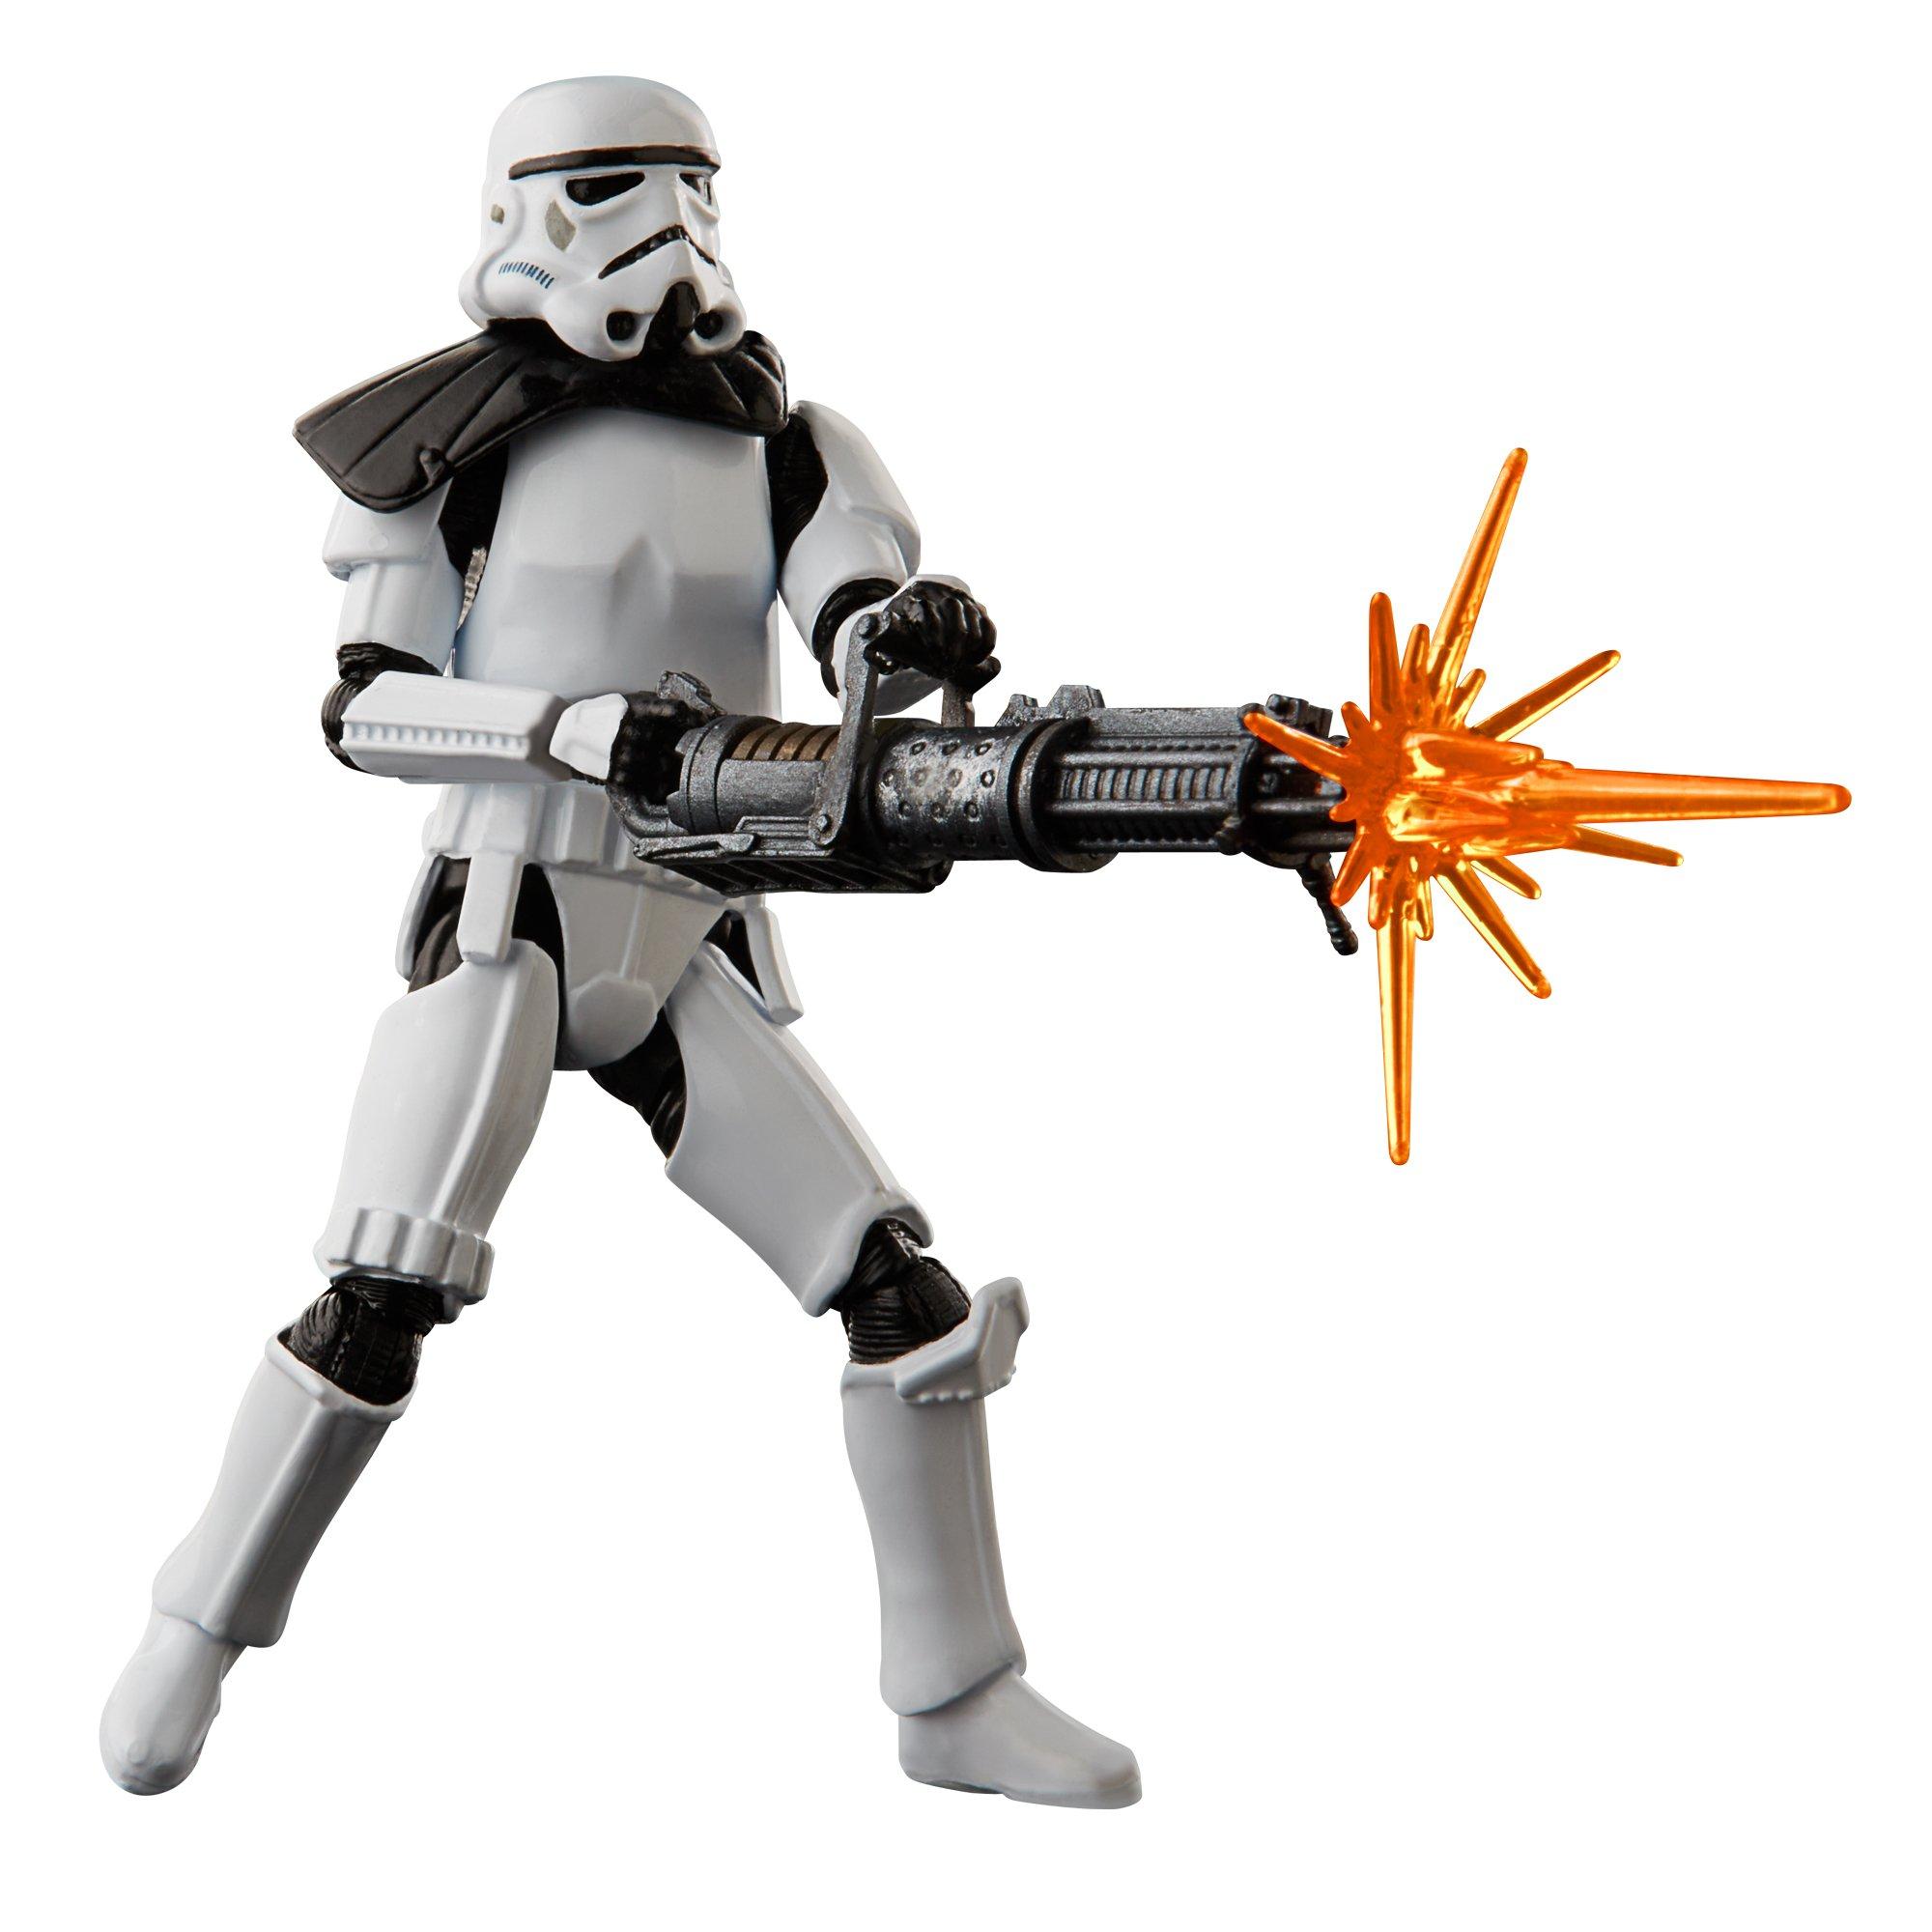 Hasbro Star Wars Rebels Stormtrooper Action Figure for sale online 